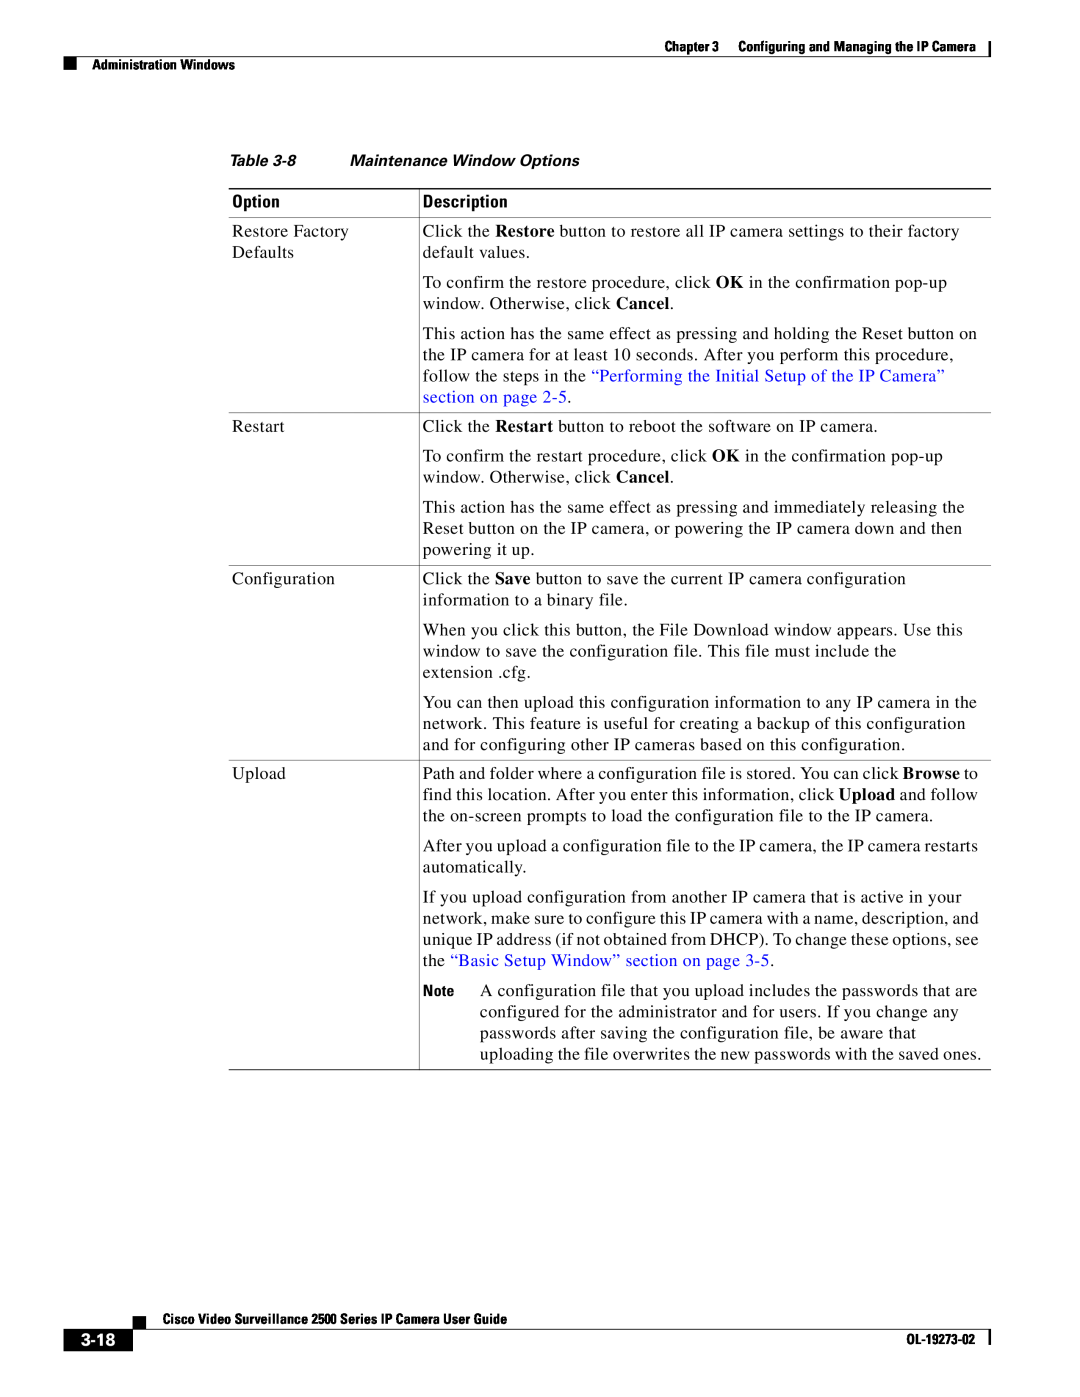 Cisco Systems 2500 Series, CIVS-IPC-2500 manual the “Basic Setup Window” section on page, 3-18, Option, Description 